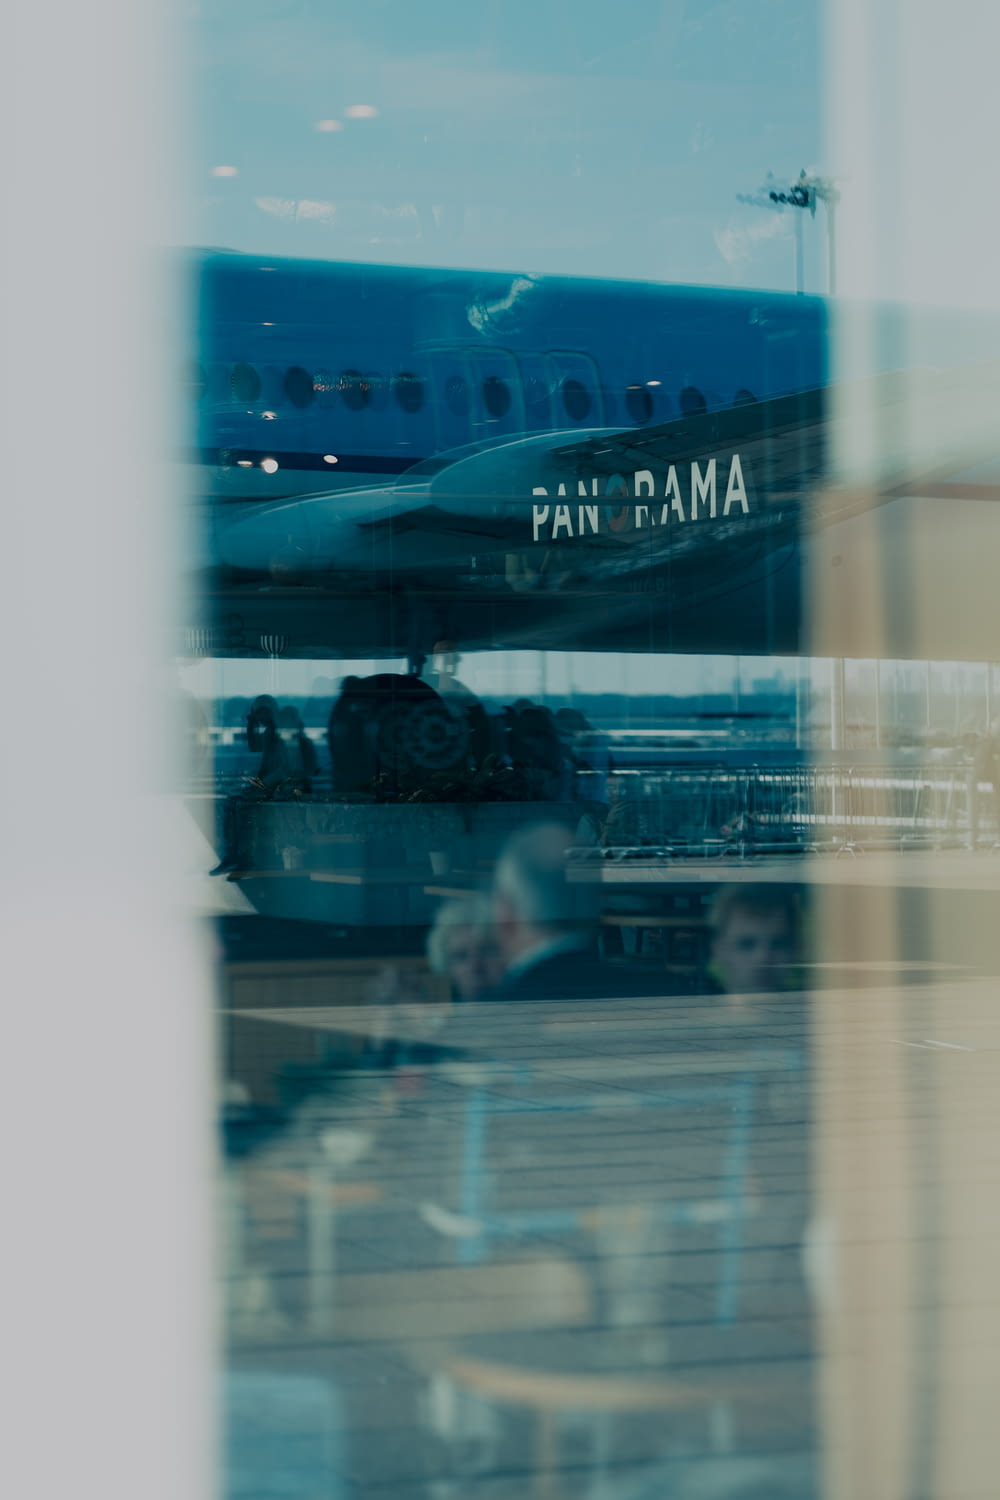 a pan ama airplane is seen through a window